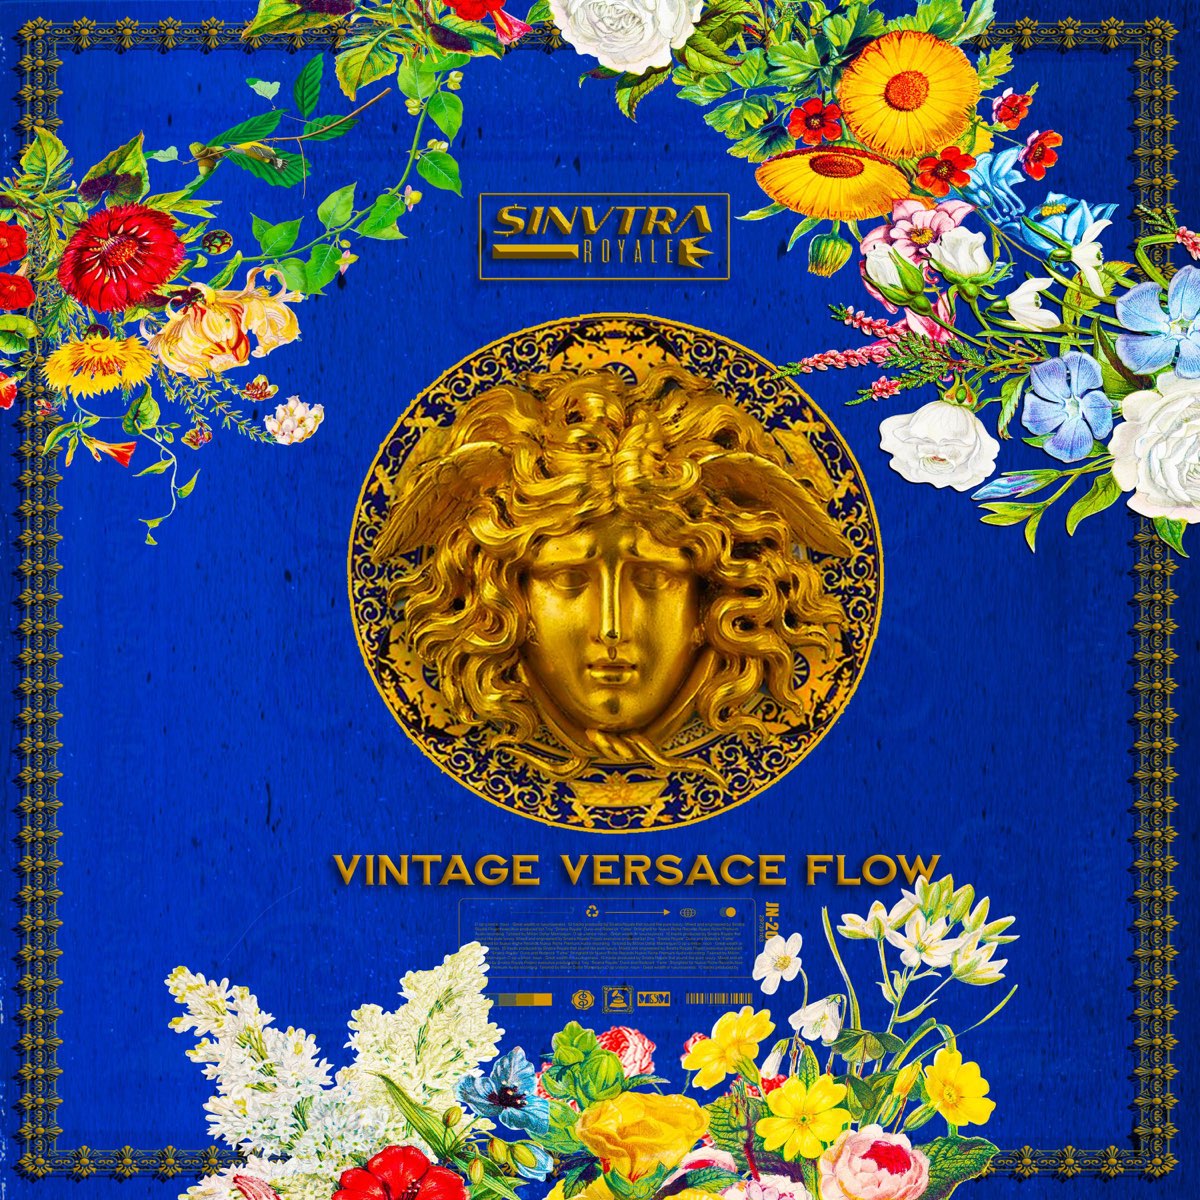 Vintage Versace Flow - Single - Album by Sinatra Royale - Apple Music